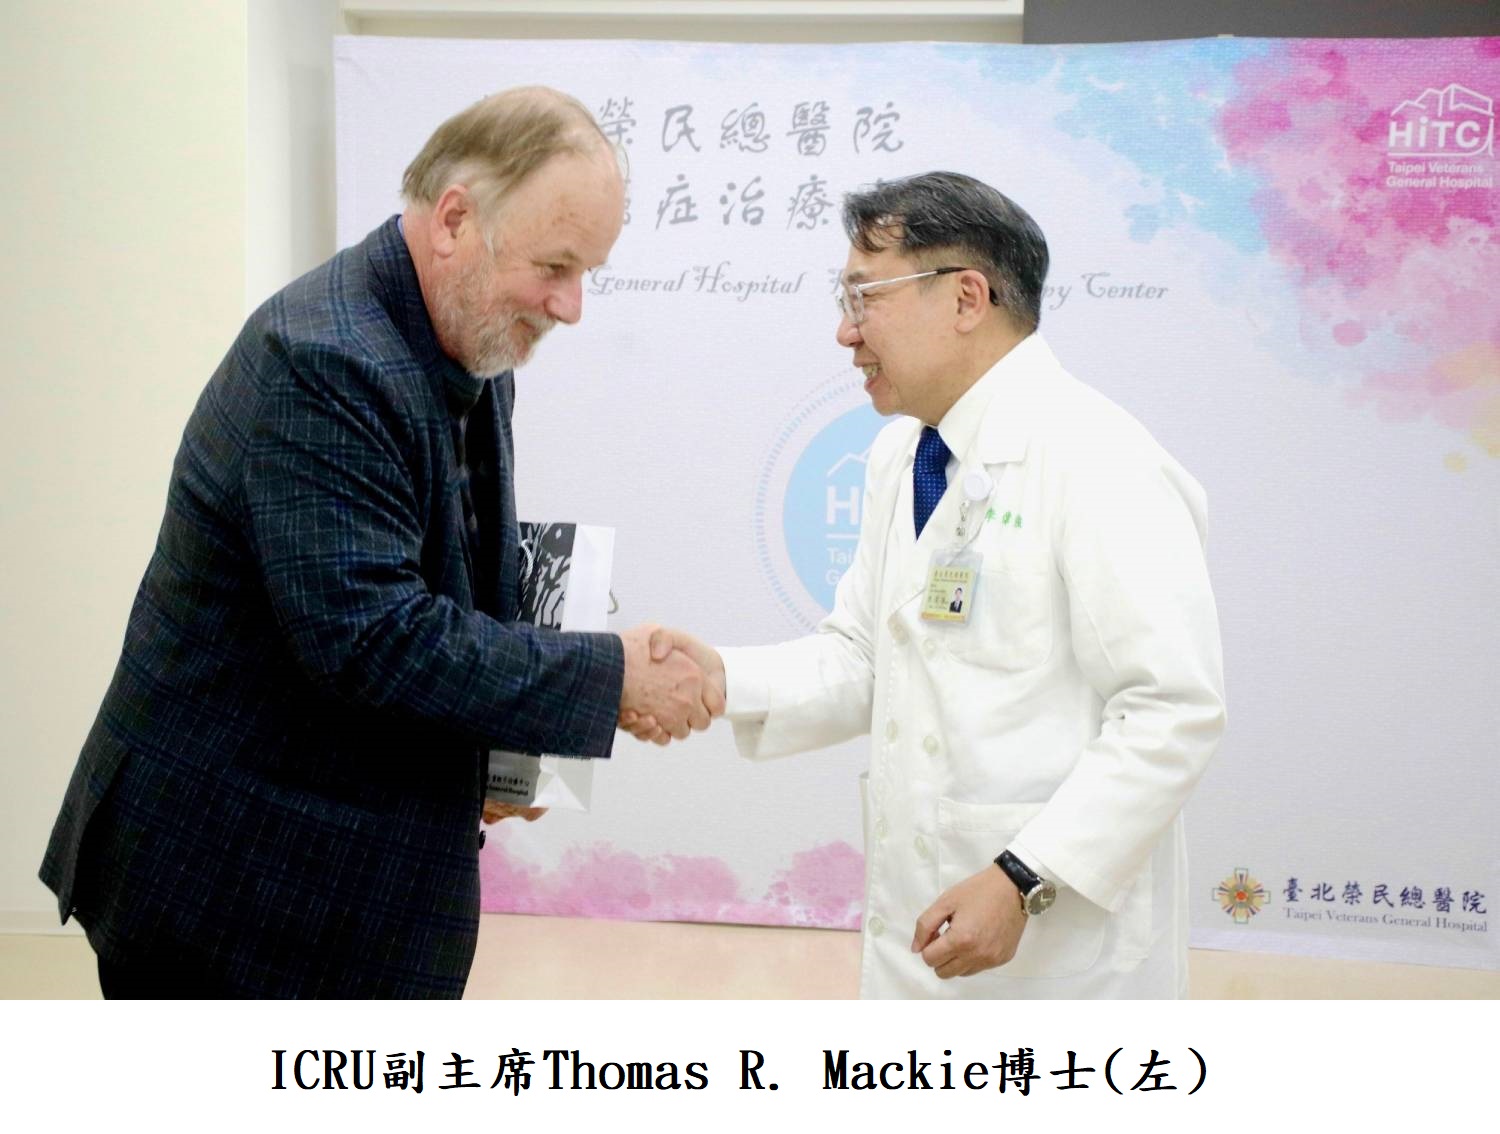 ICRU副主席Thomas R. Mackie博士(左)